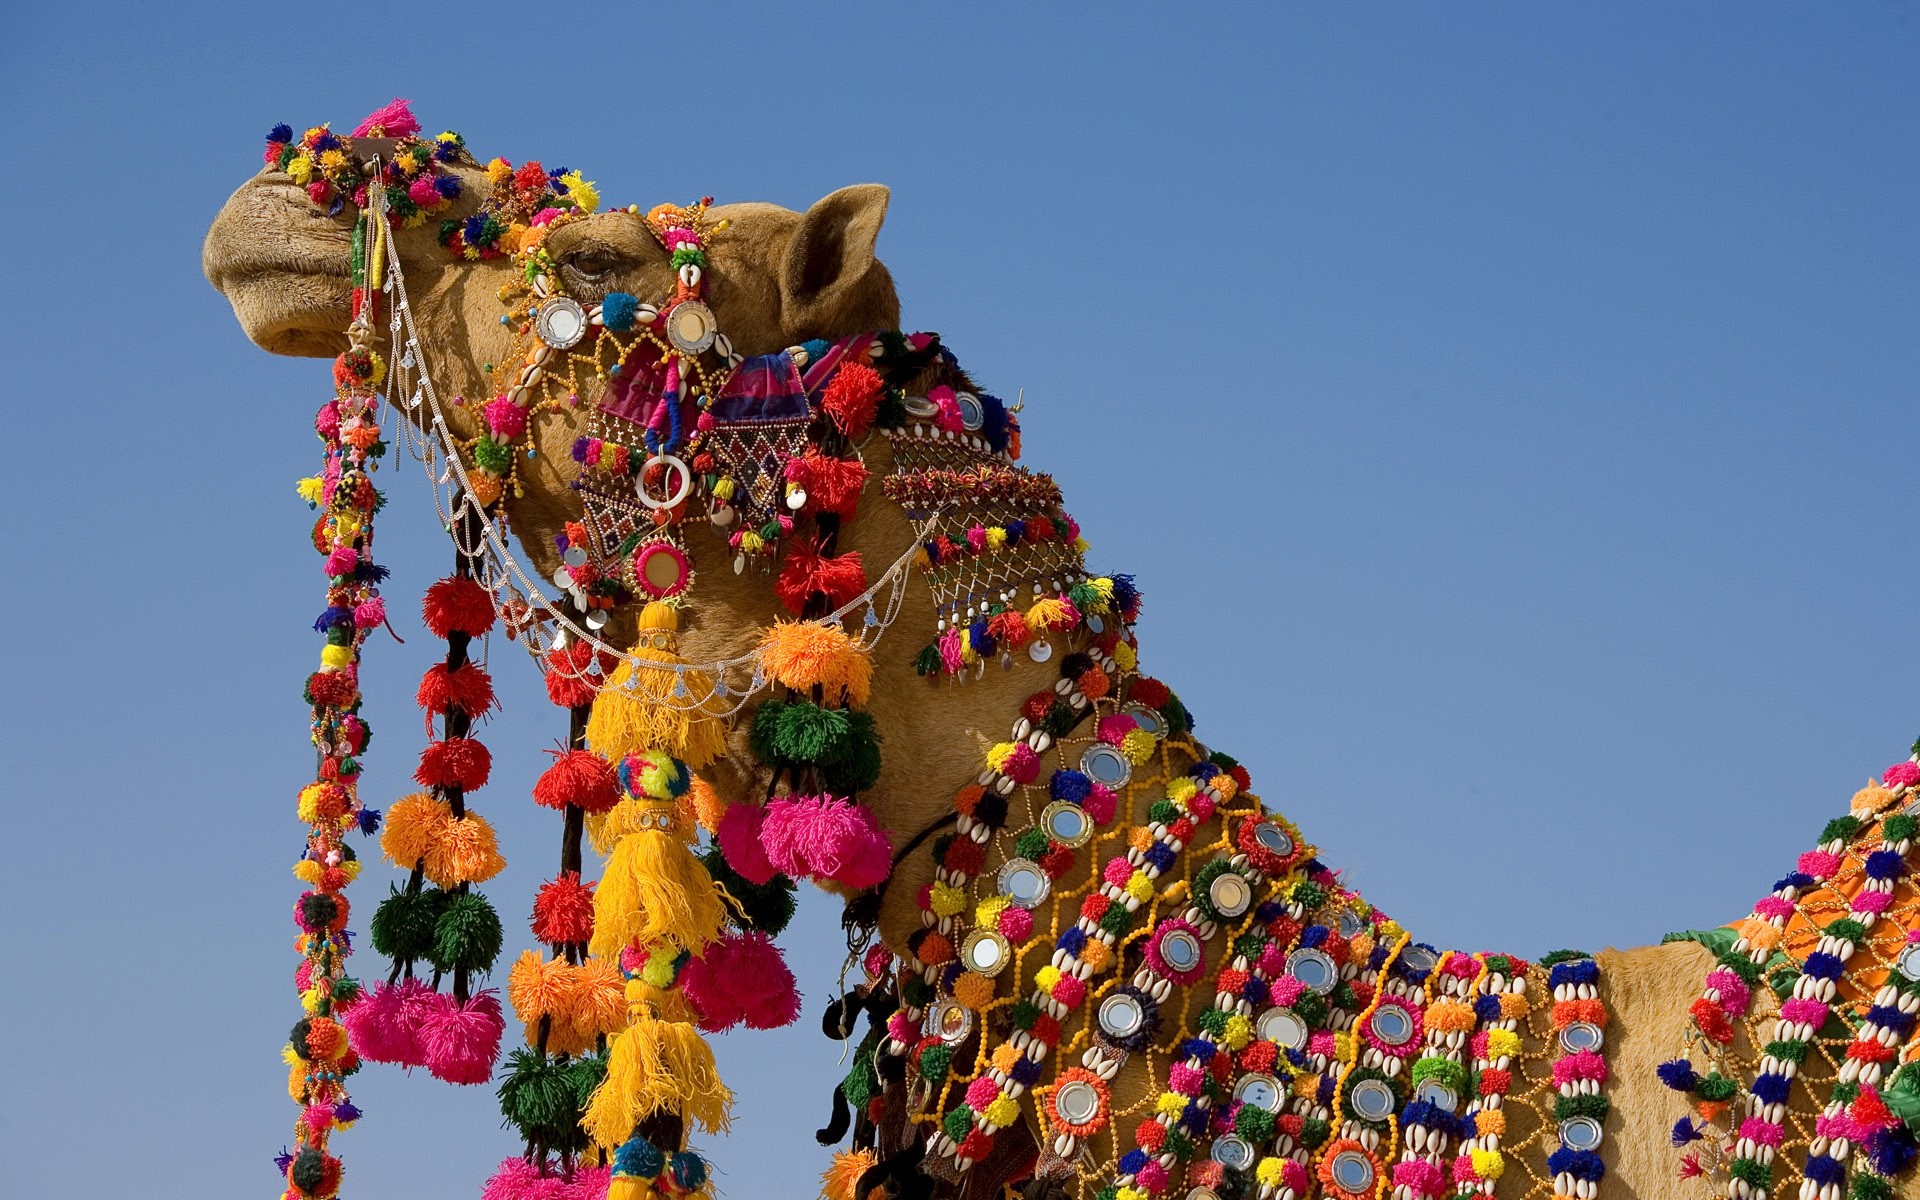 animals festival decoration traditional religion art color sculpture sky travel culture bright celebration vacation camel